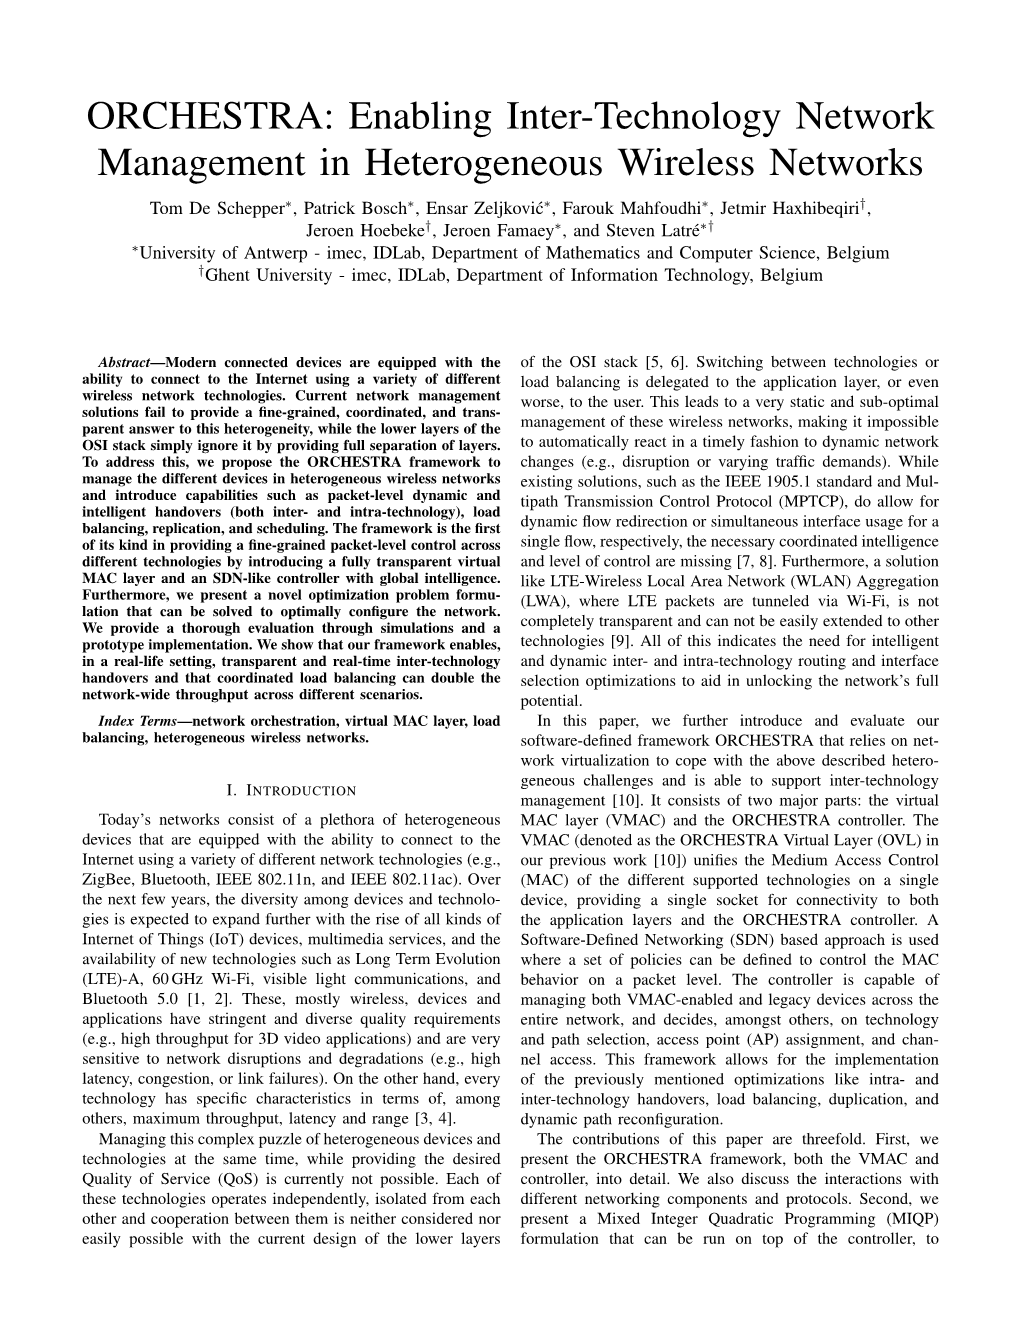 Enabling Inter-Technology Network Management in Heterogeneous